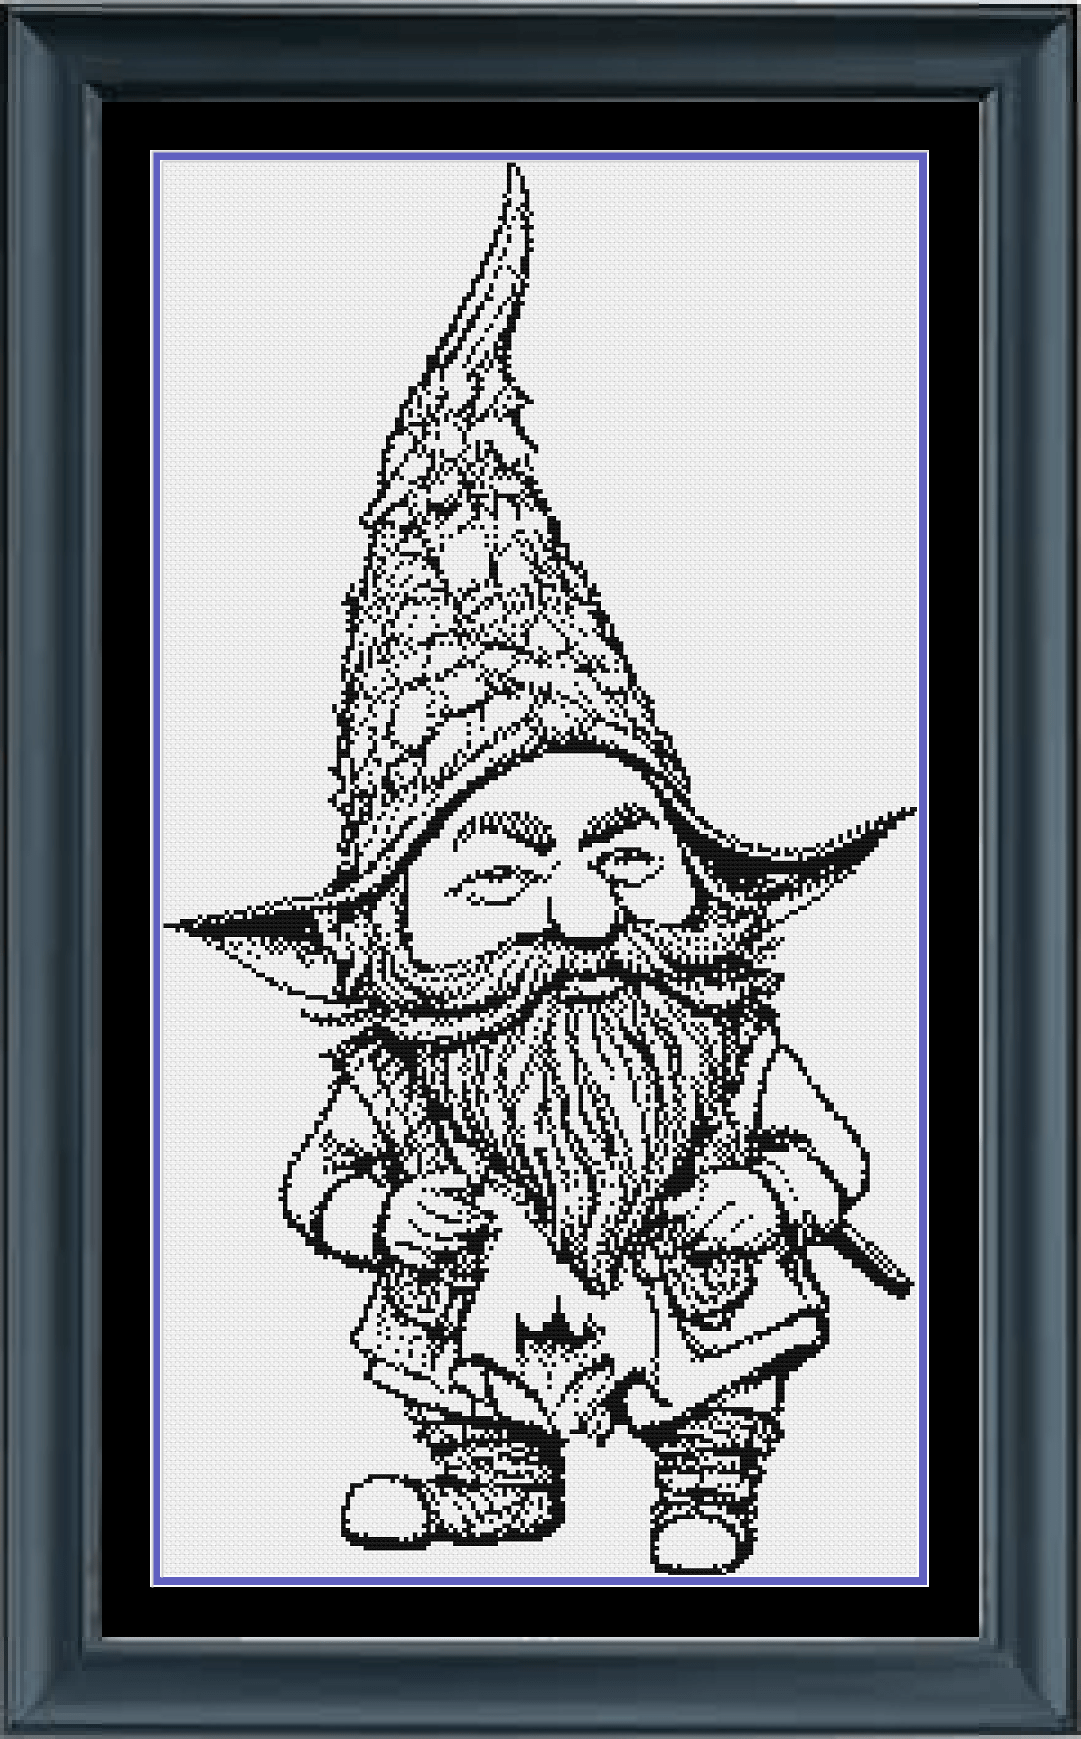 Stitching Jules Design Cross Stitch Pattern Gnome Dwarf Fantasy Cross Stitch Pattern | Monochrome Blackwork | Instant Download PDF